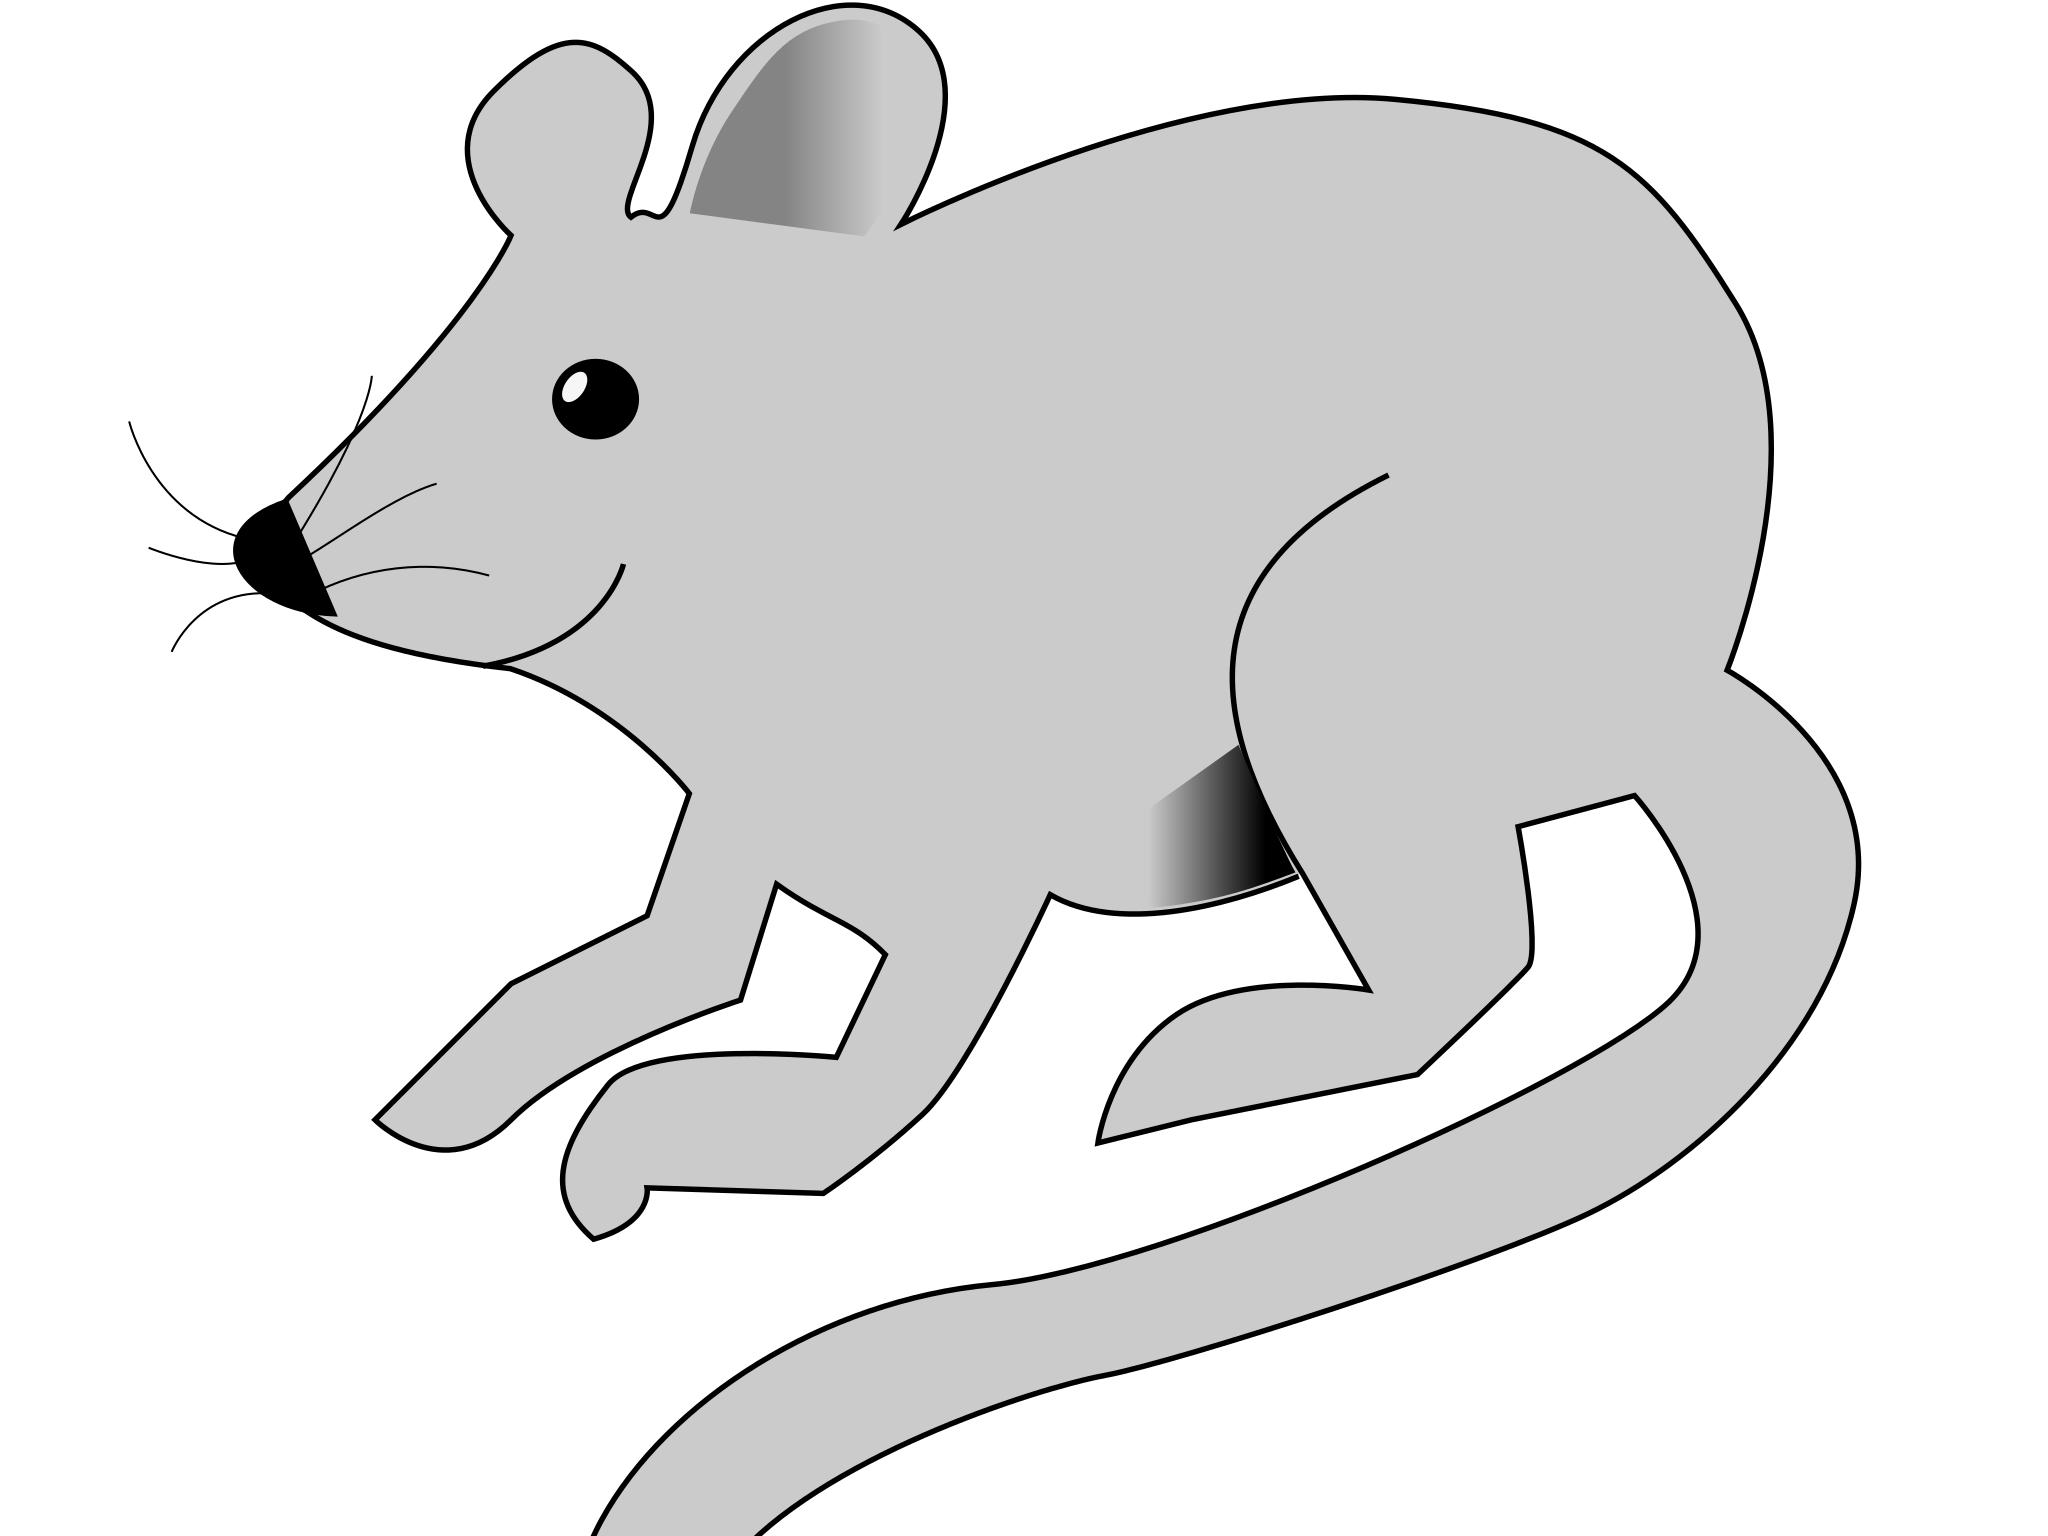 Мышь трафарет для вырезания